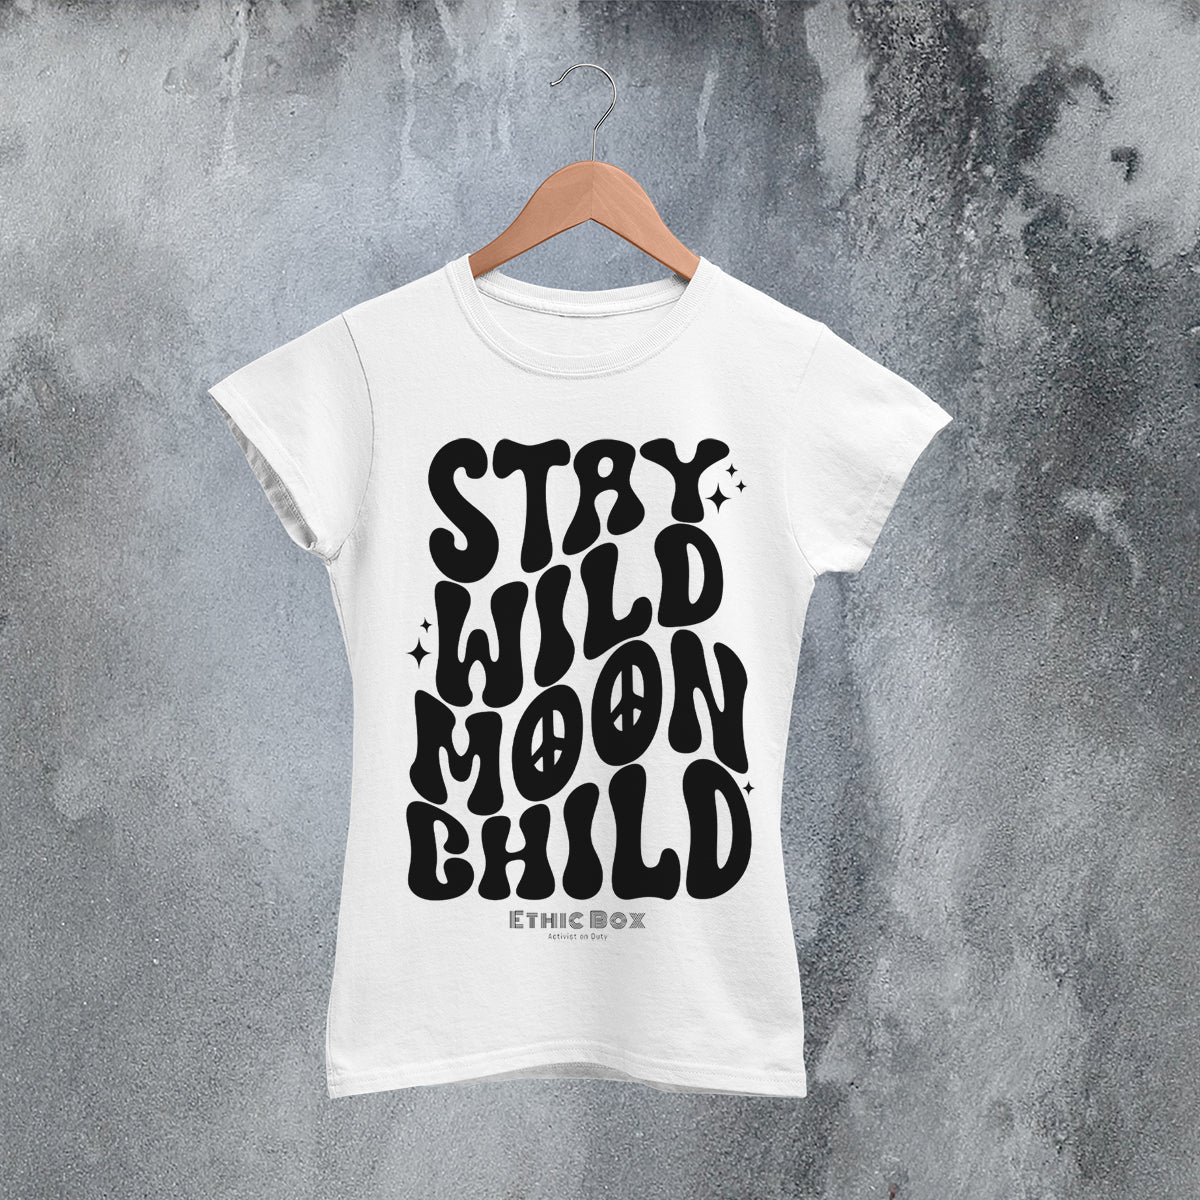 Stay Wild Moon Child - Women Fit